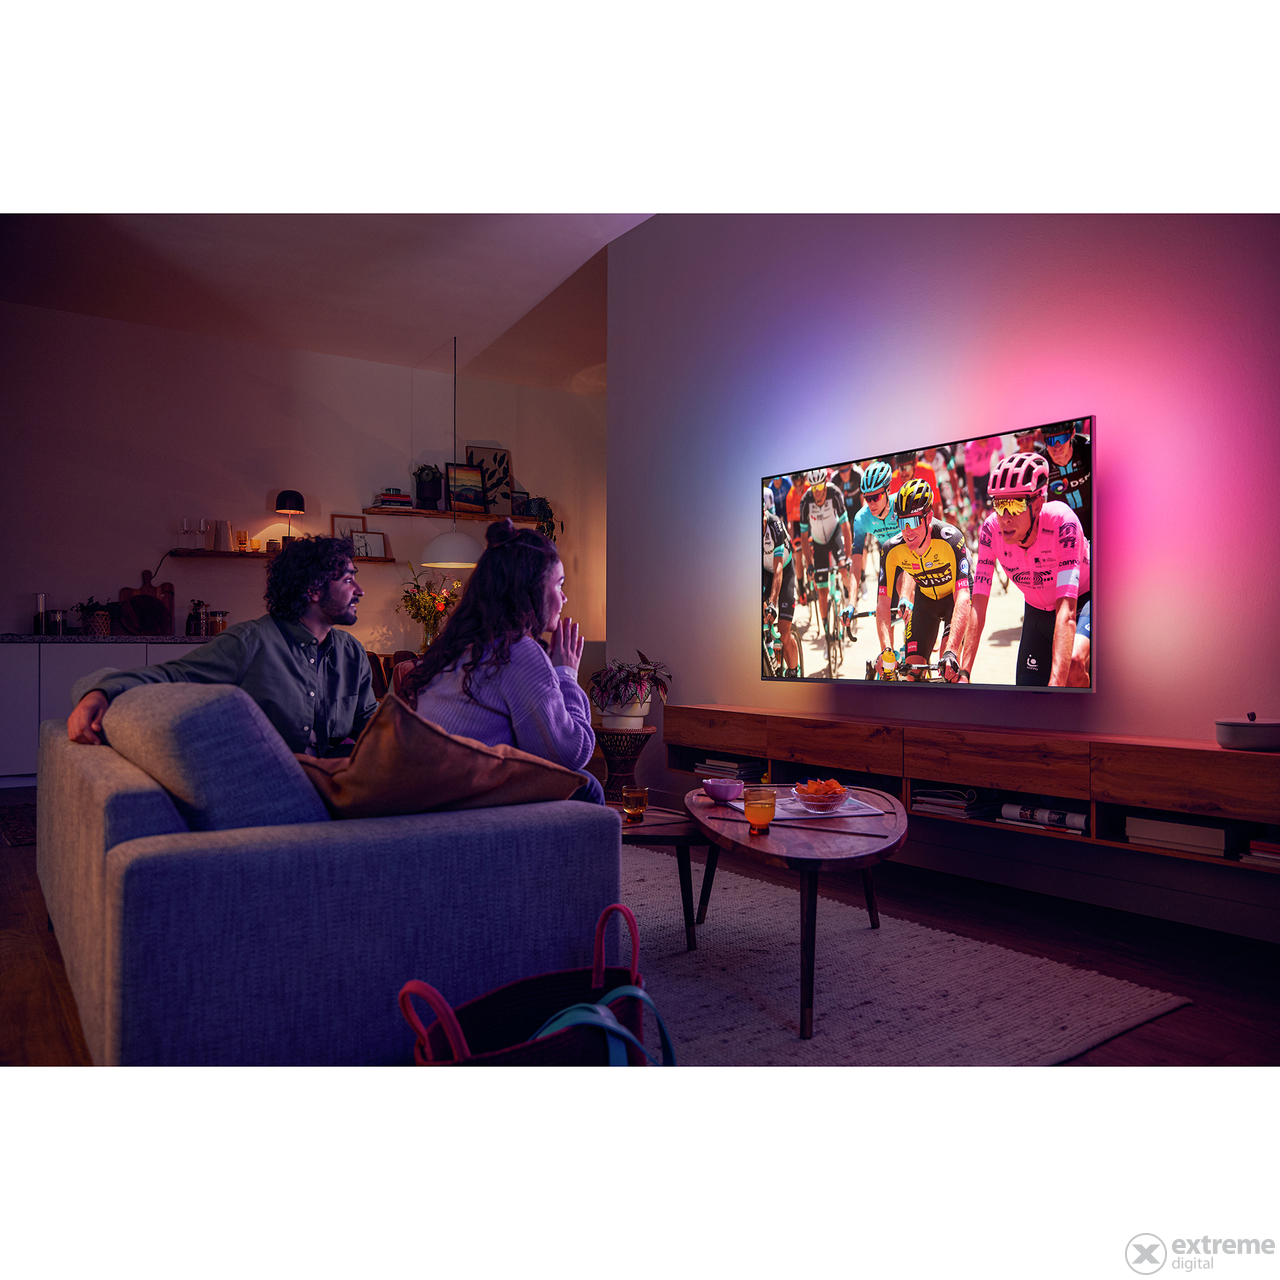 Philips 43PUS8507 Smart LED Televizija, 108 cm, 4K Ultra HD, Android, Ambilight, HDR 10+